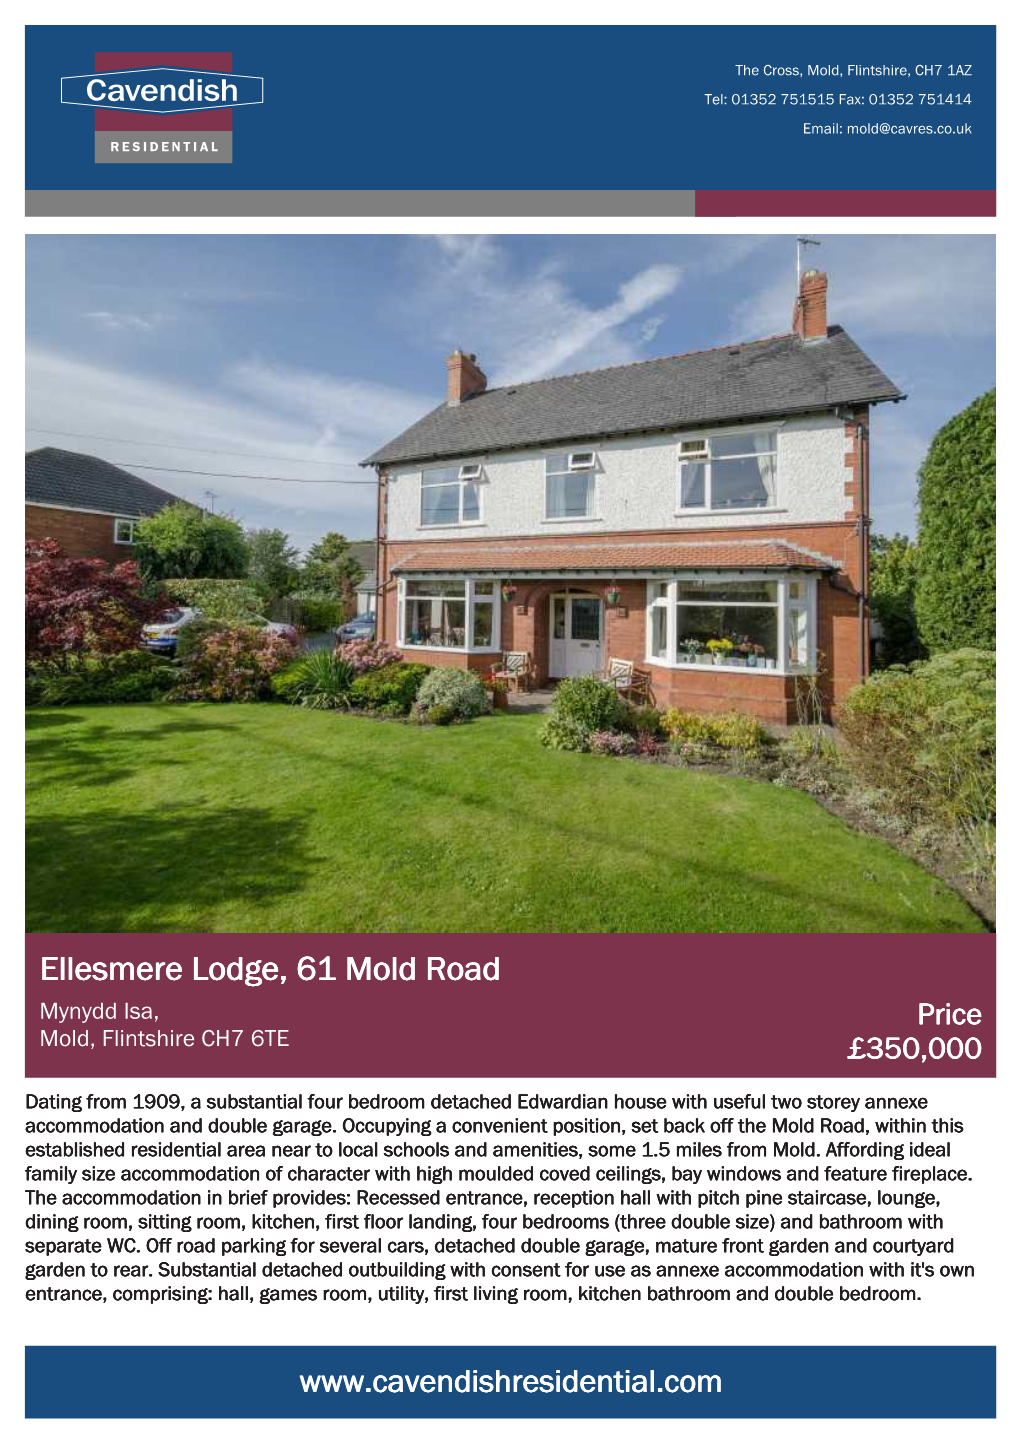 Ellesmere Lodge, 61 Mold Road Mynydd Isa, Price Mold, Flintshire CH7 6TE £350,000